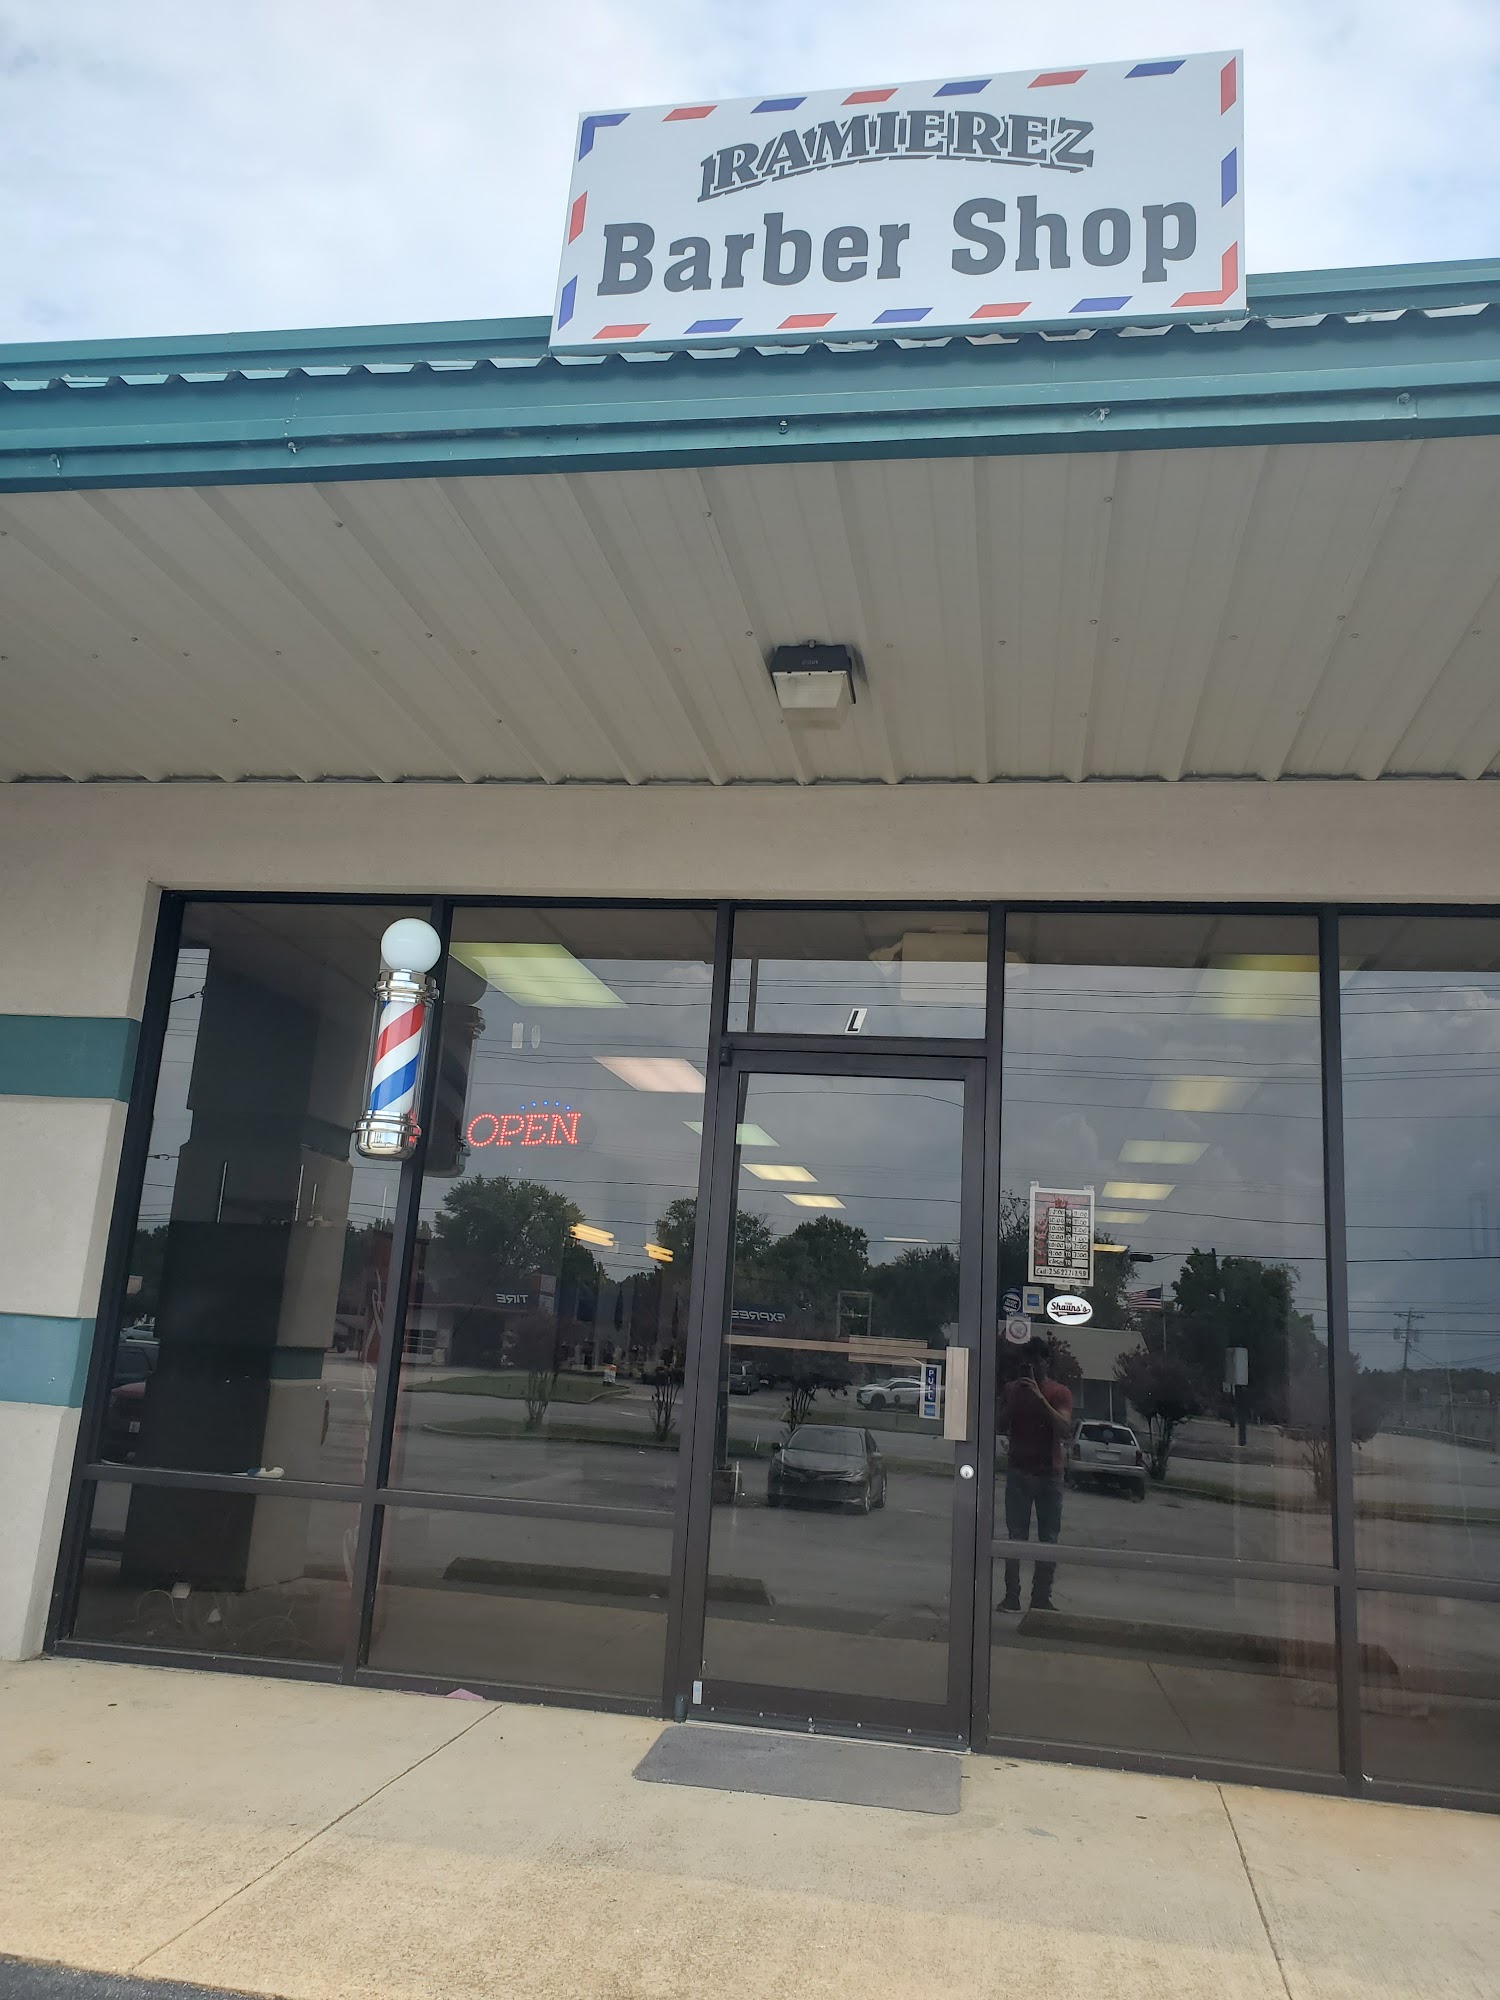 Ramirez barbershop